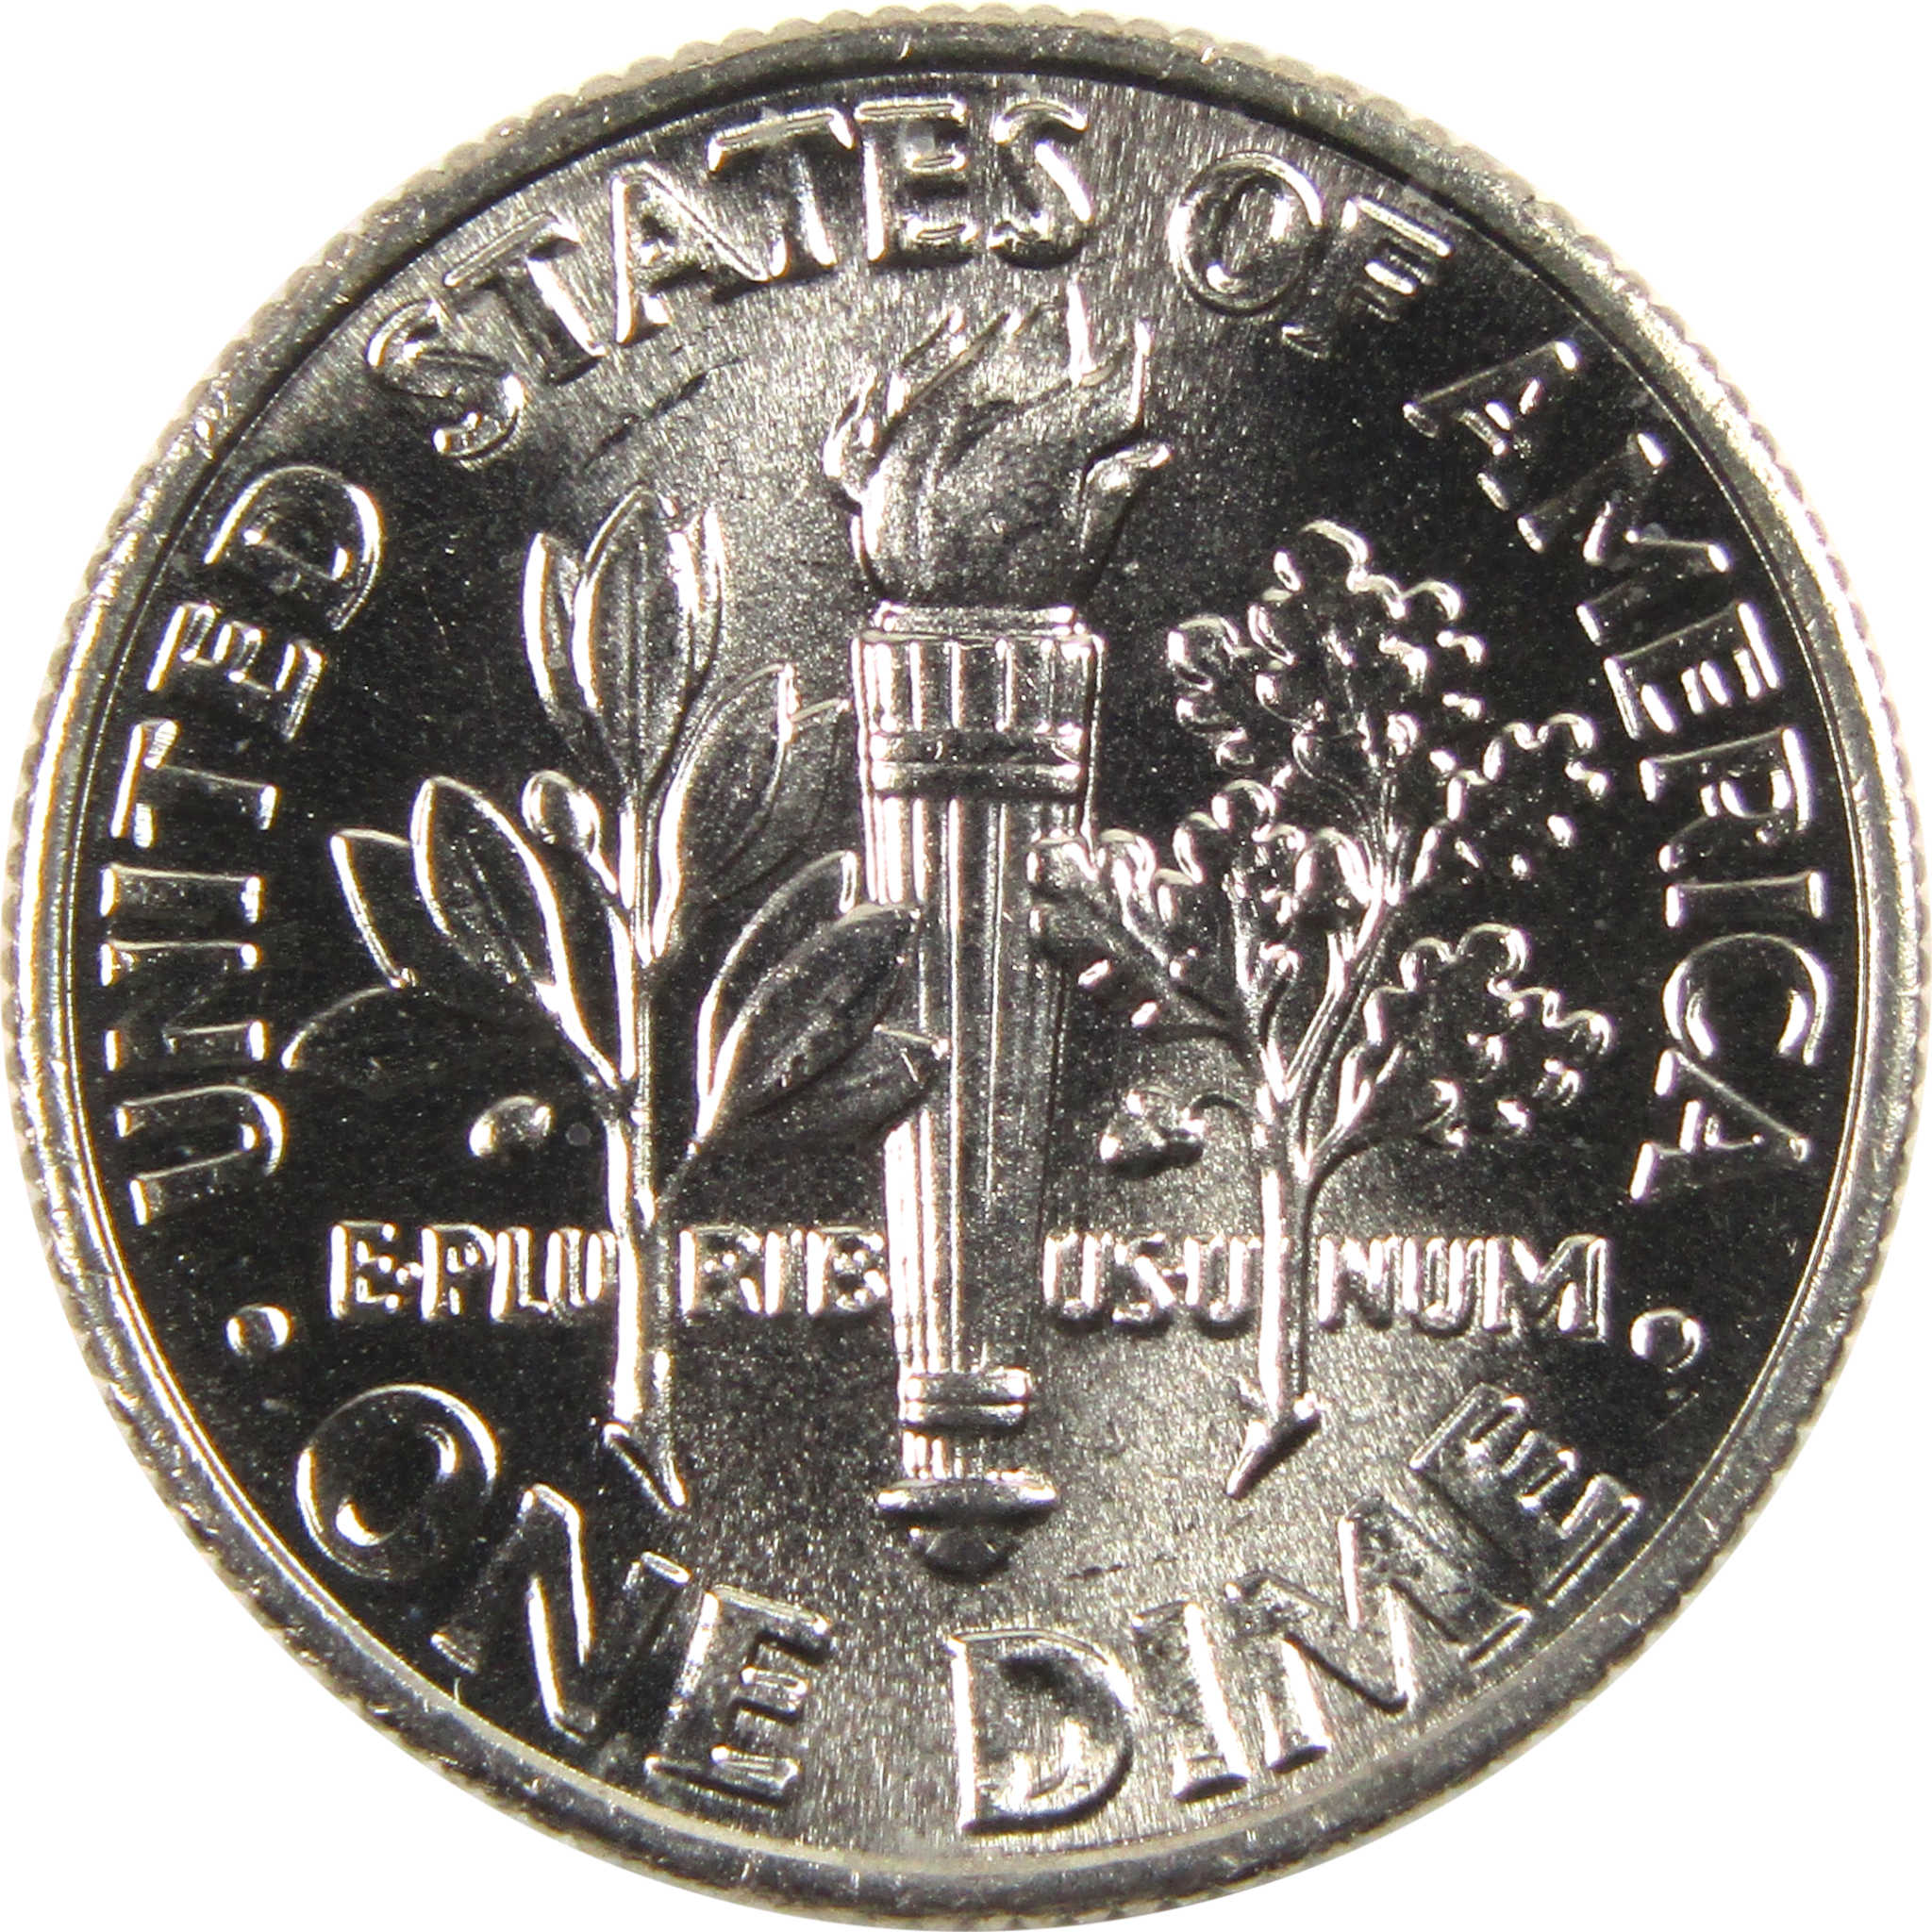 2019 D Roosevelt Dime BU Uncirculated Clad 10c Coin